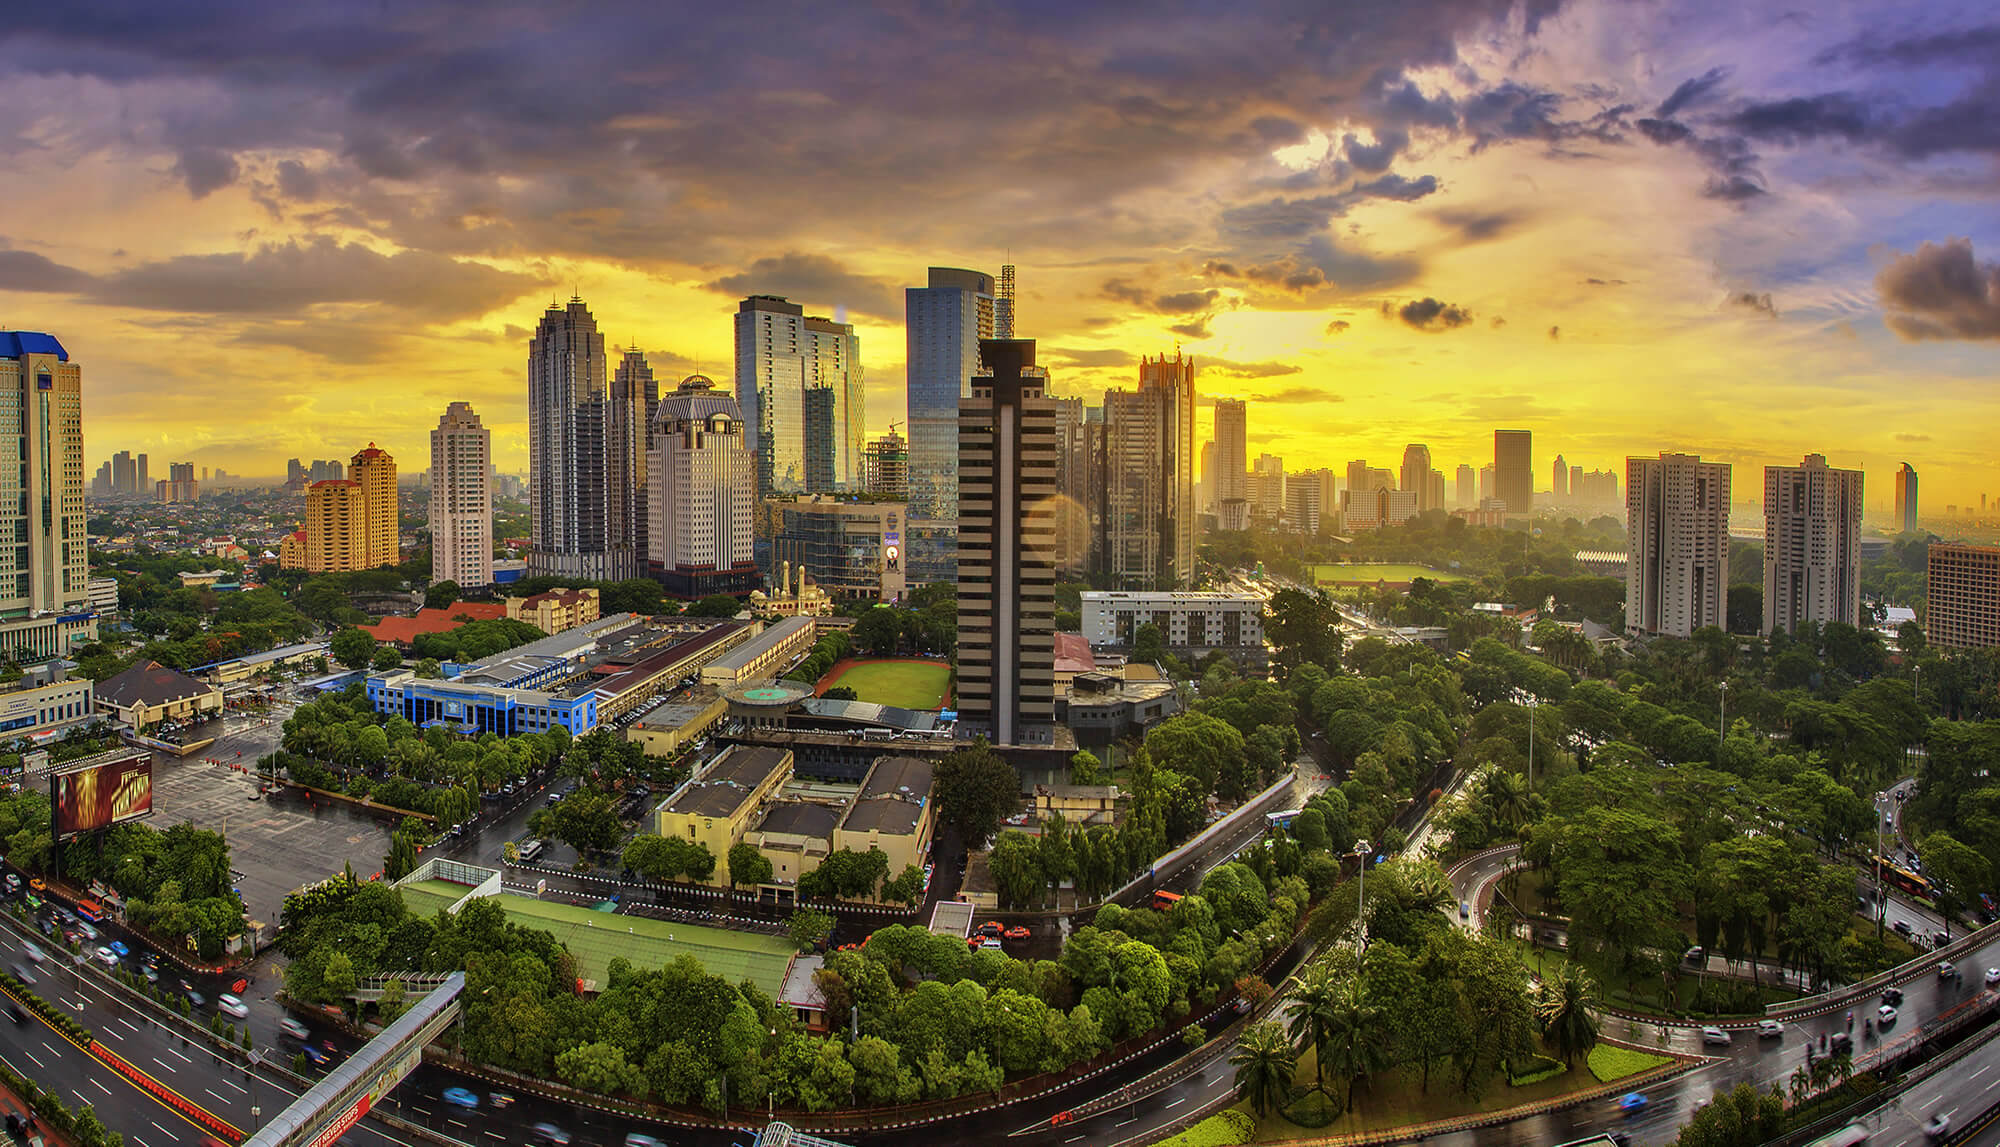 Capital Region of Jakarta, Indonesia